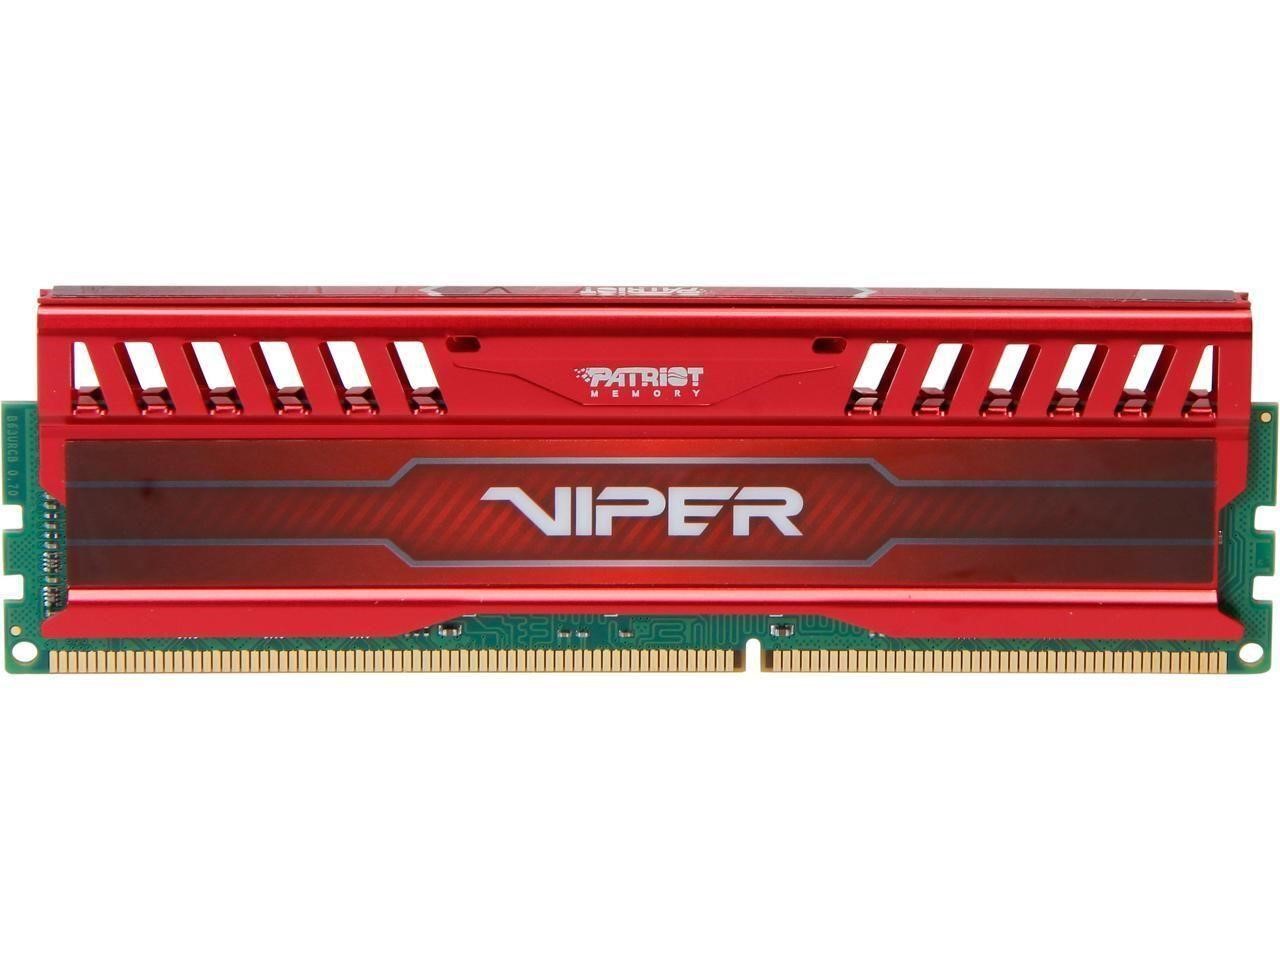 Patriot Viper 3 4GB DDR3